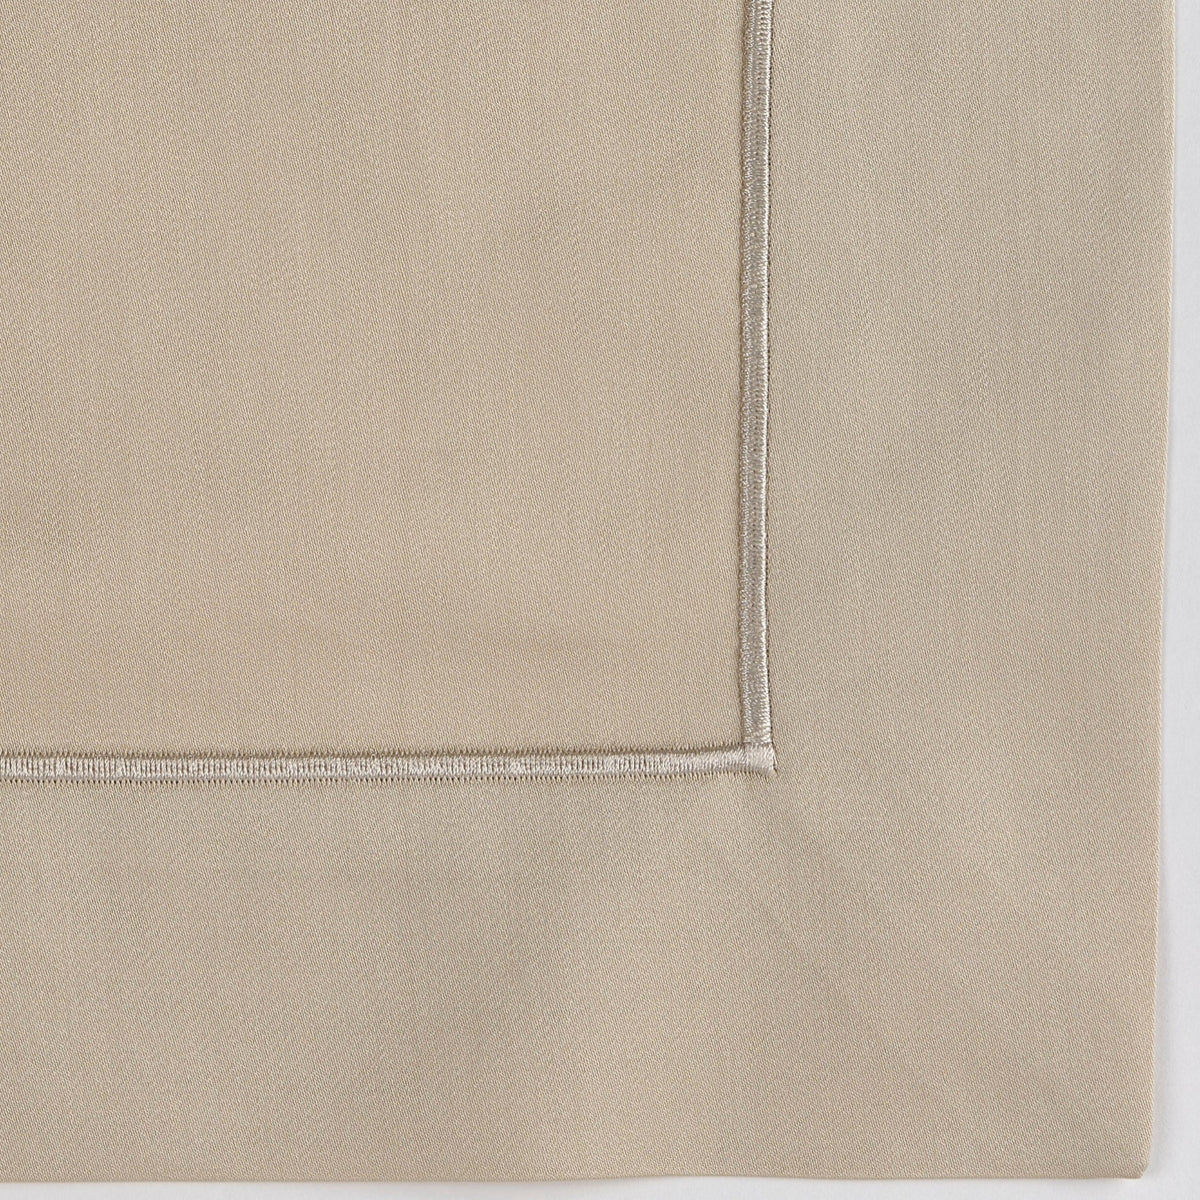 Swatch Sample of Celso de Lemos Bourdon Bedding Linen Color